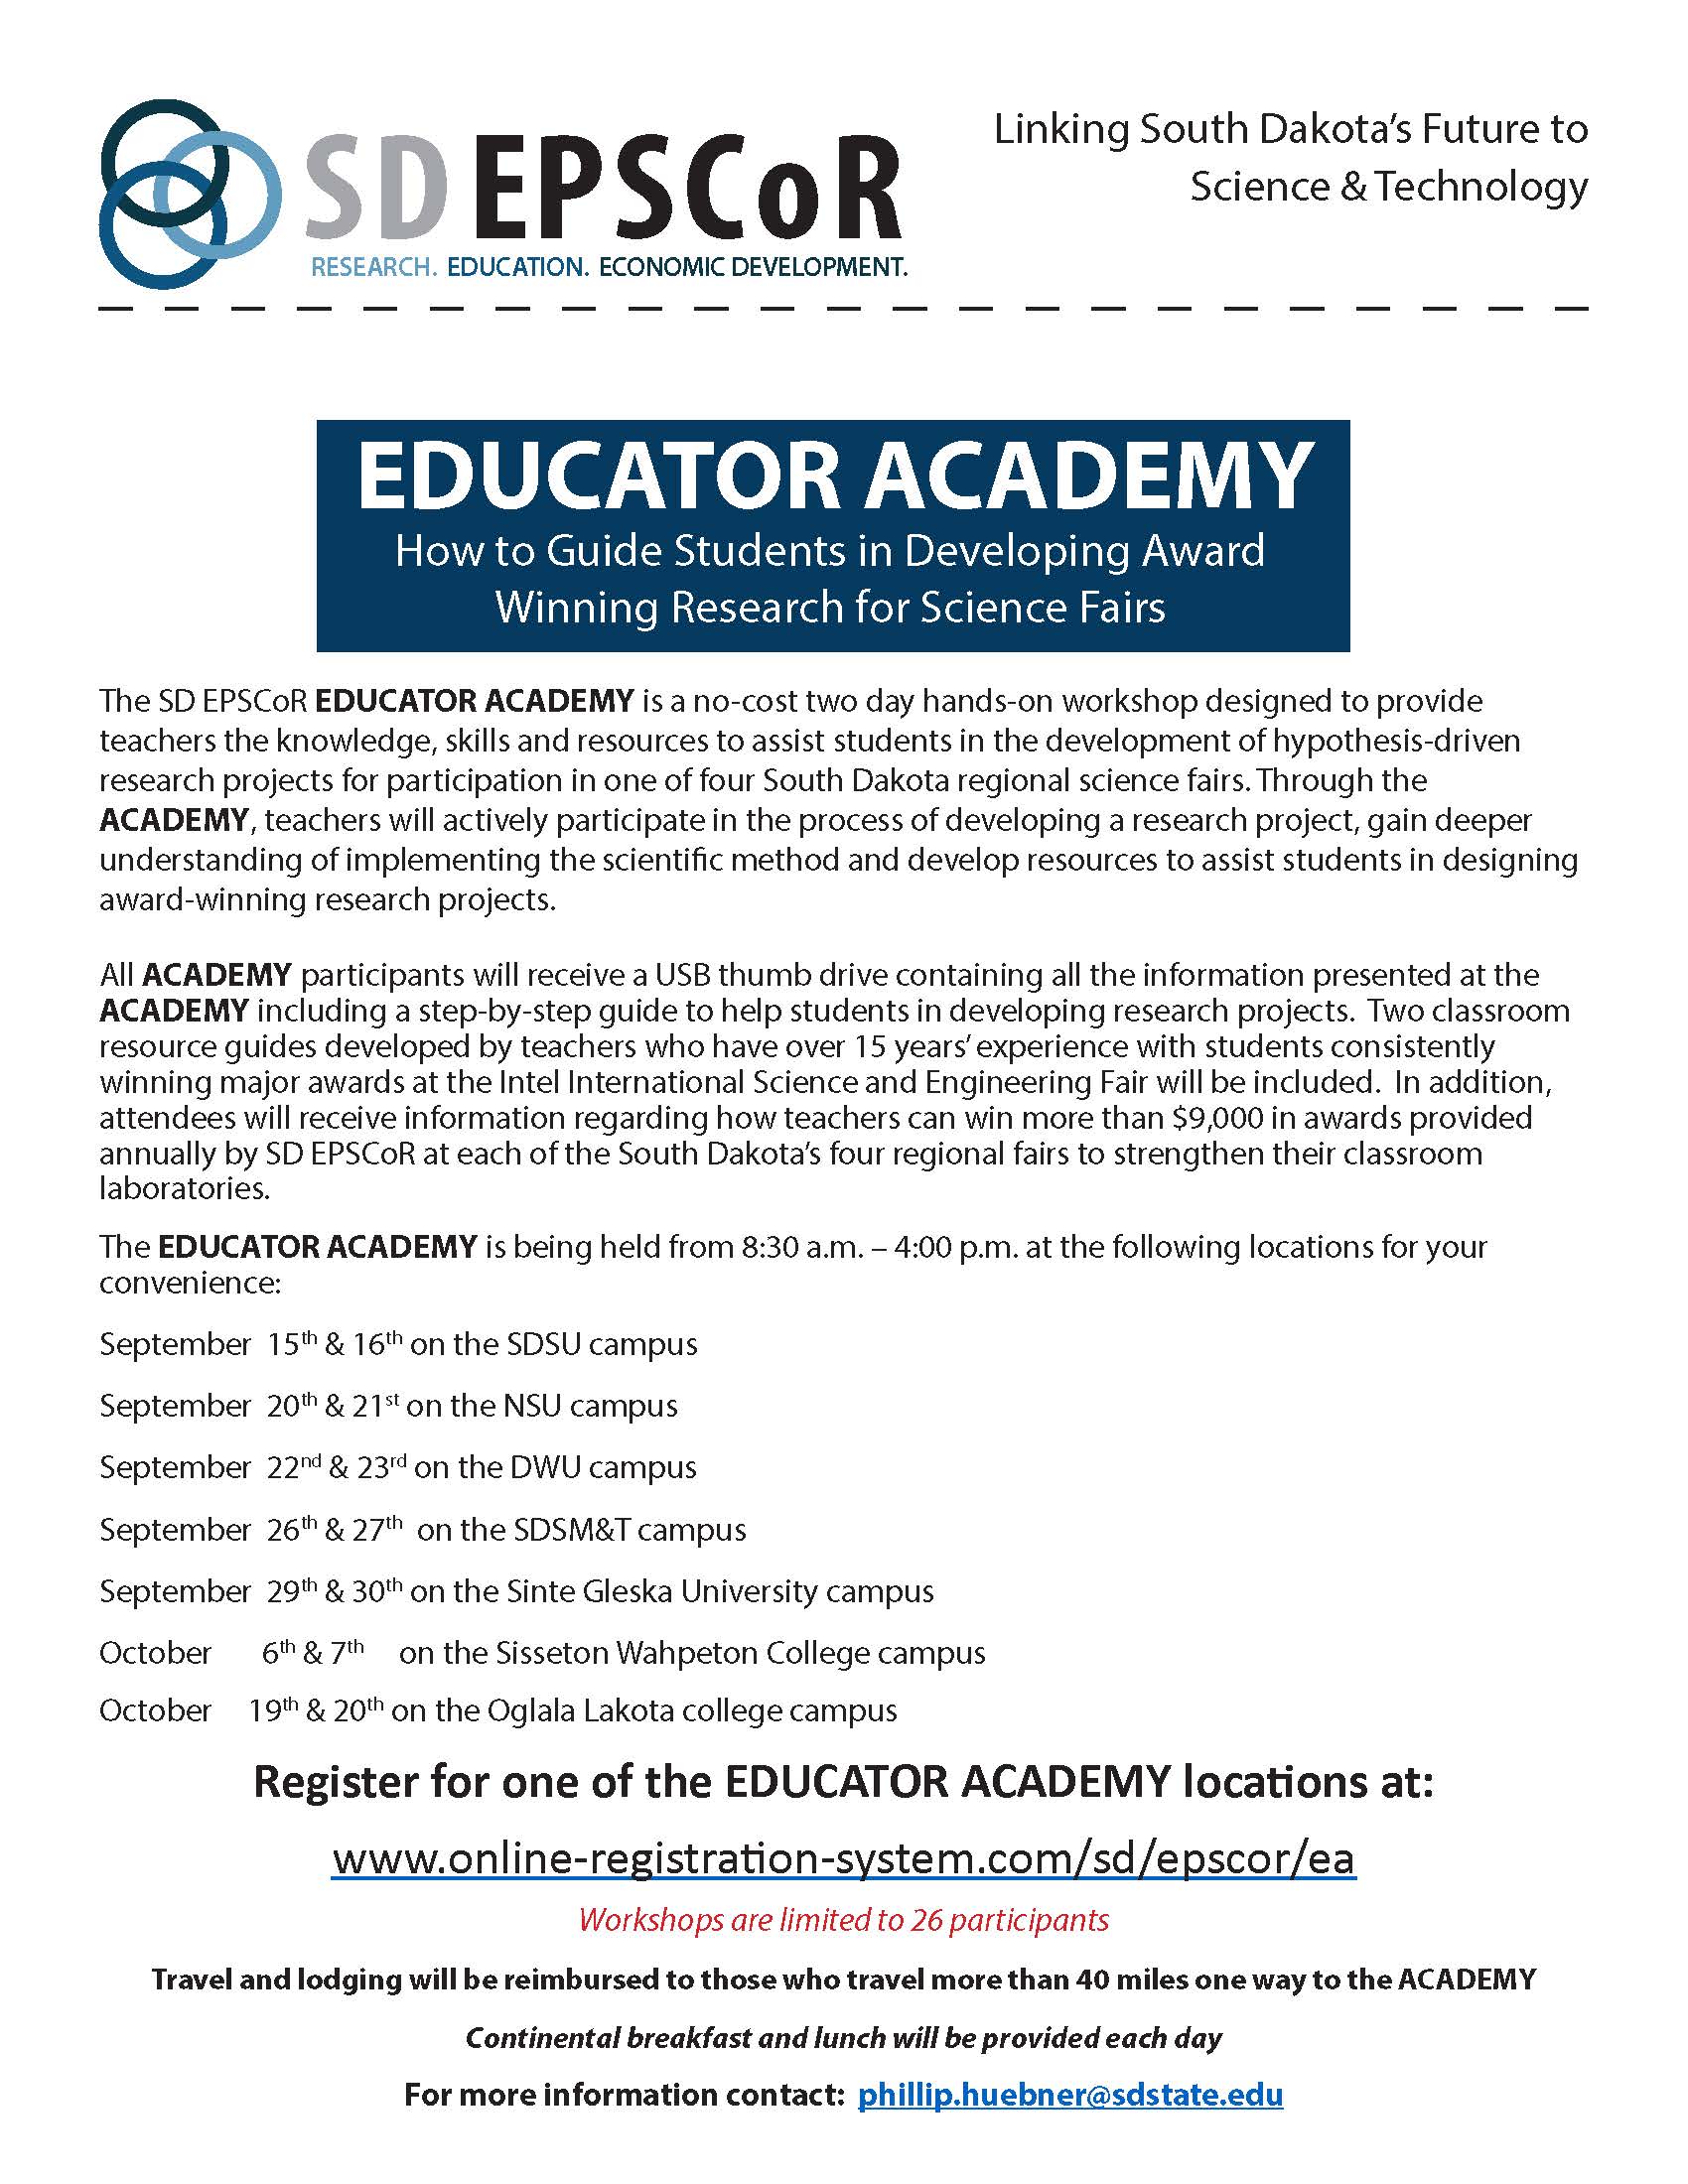 educator academy flyer_print